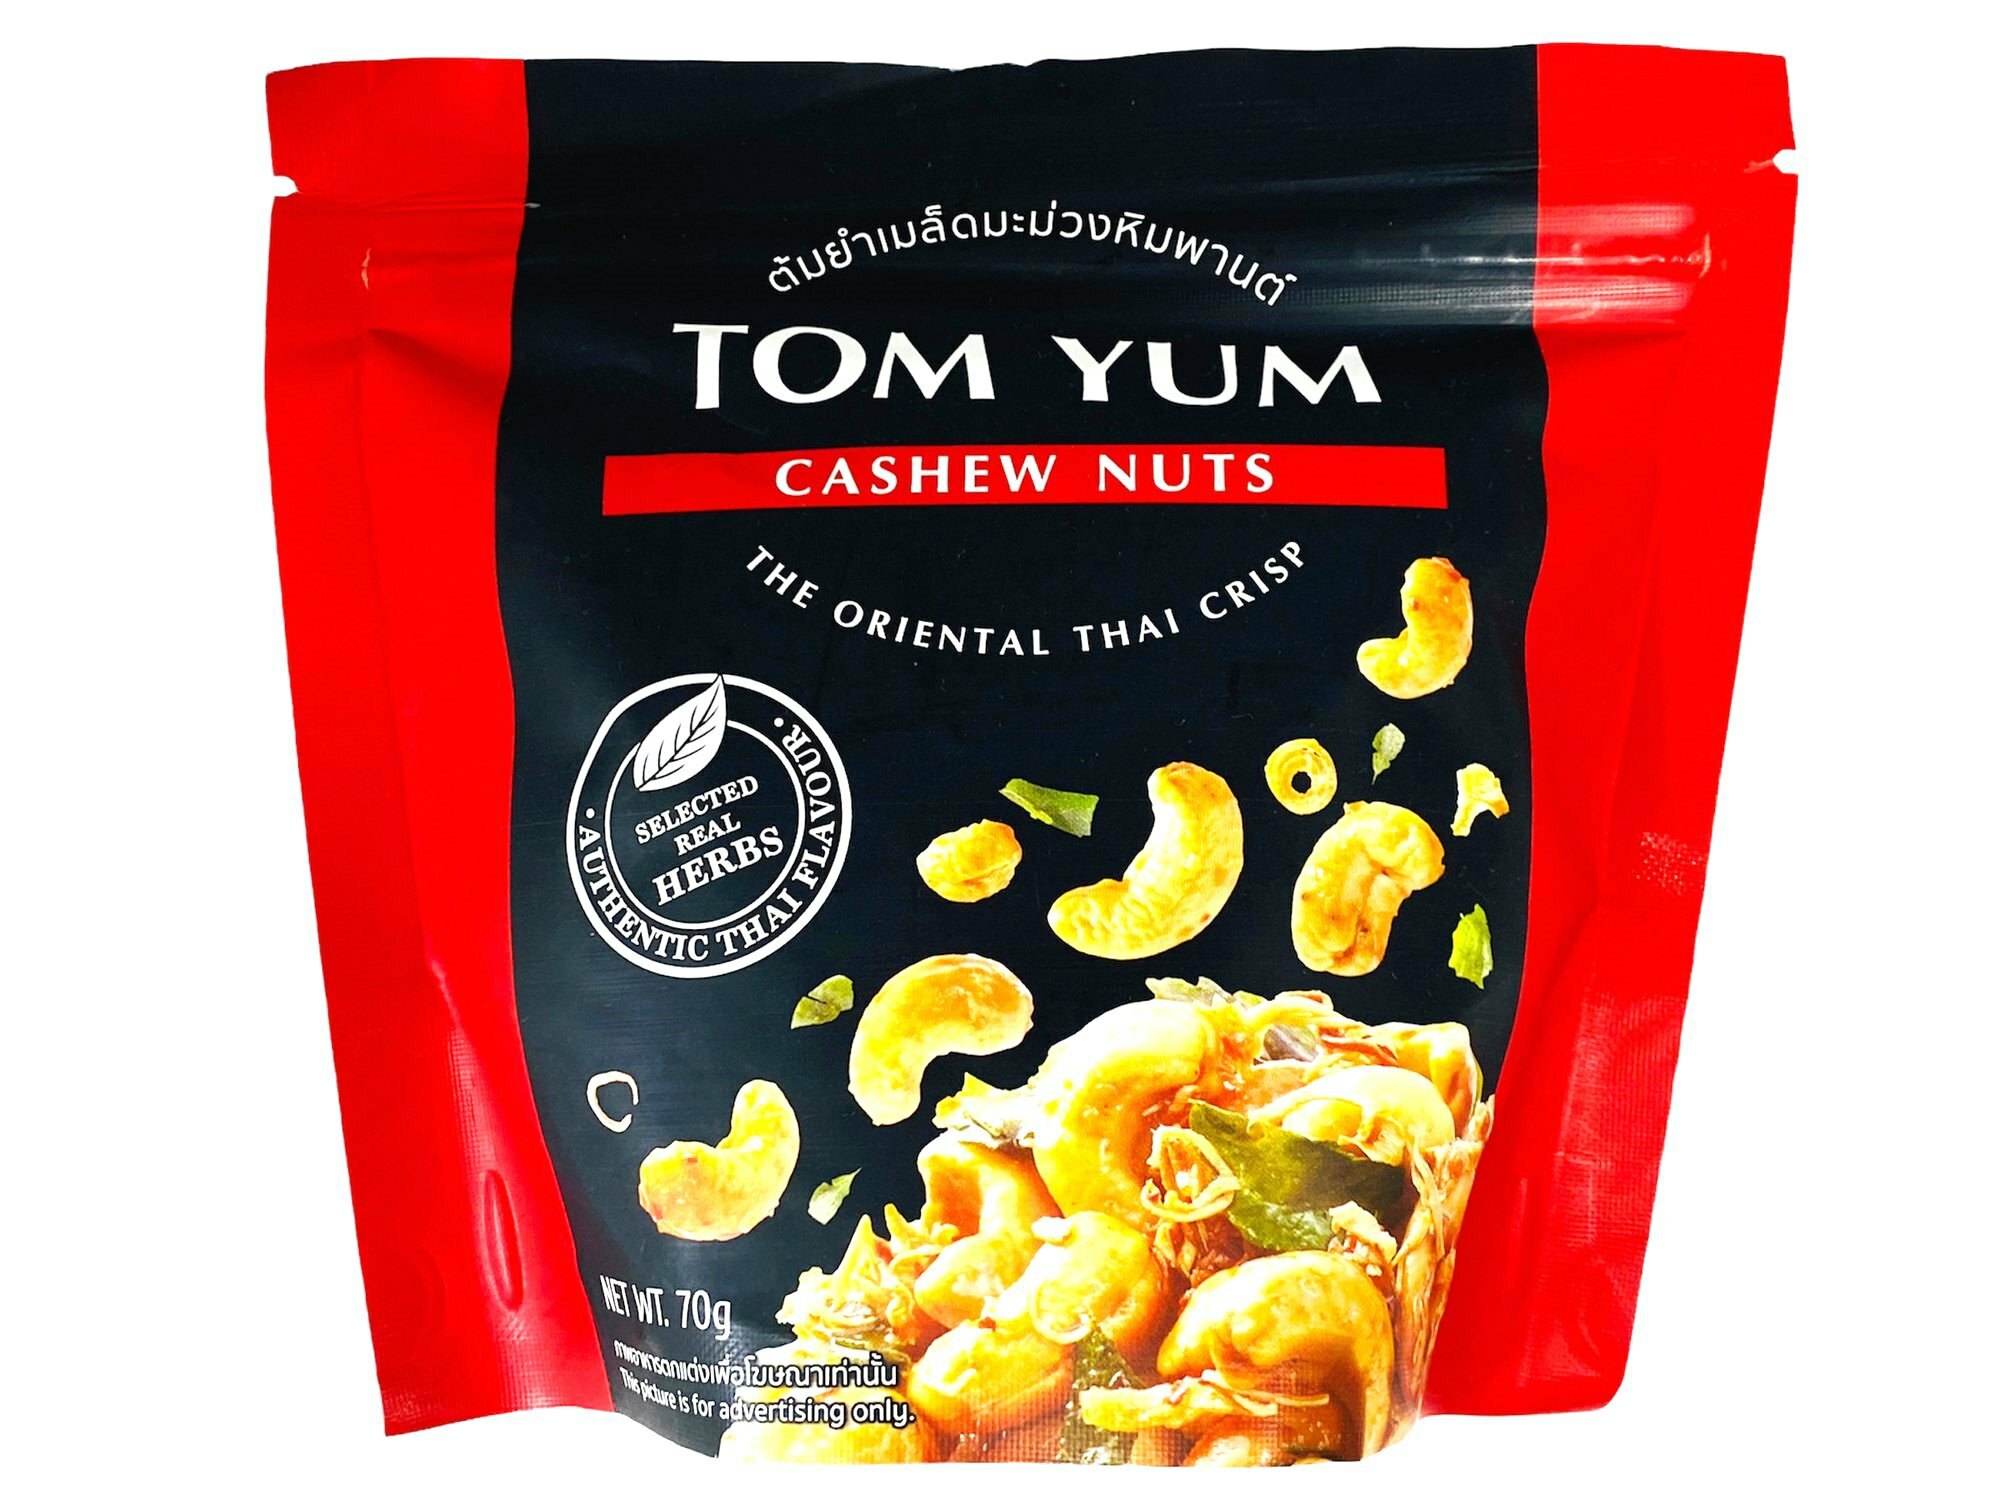 OM YUM Cashe NUTS The Oriental Thai Crisp